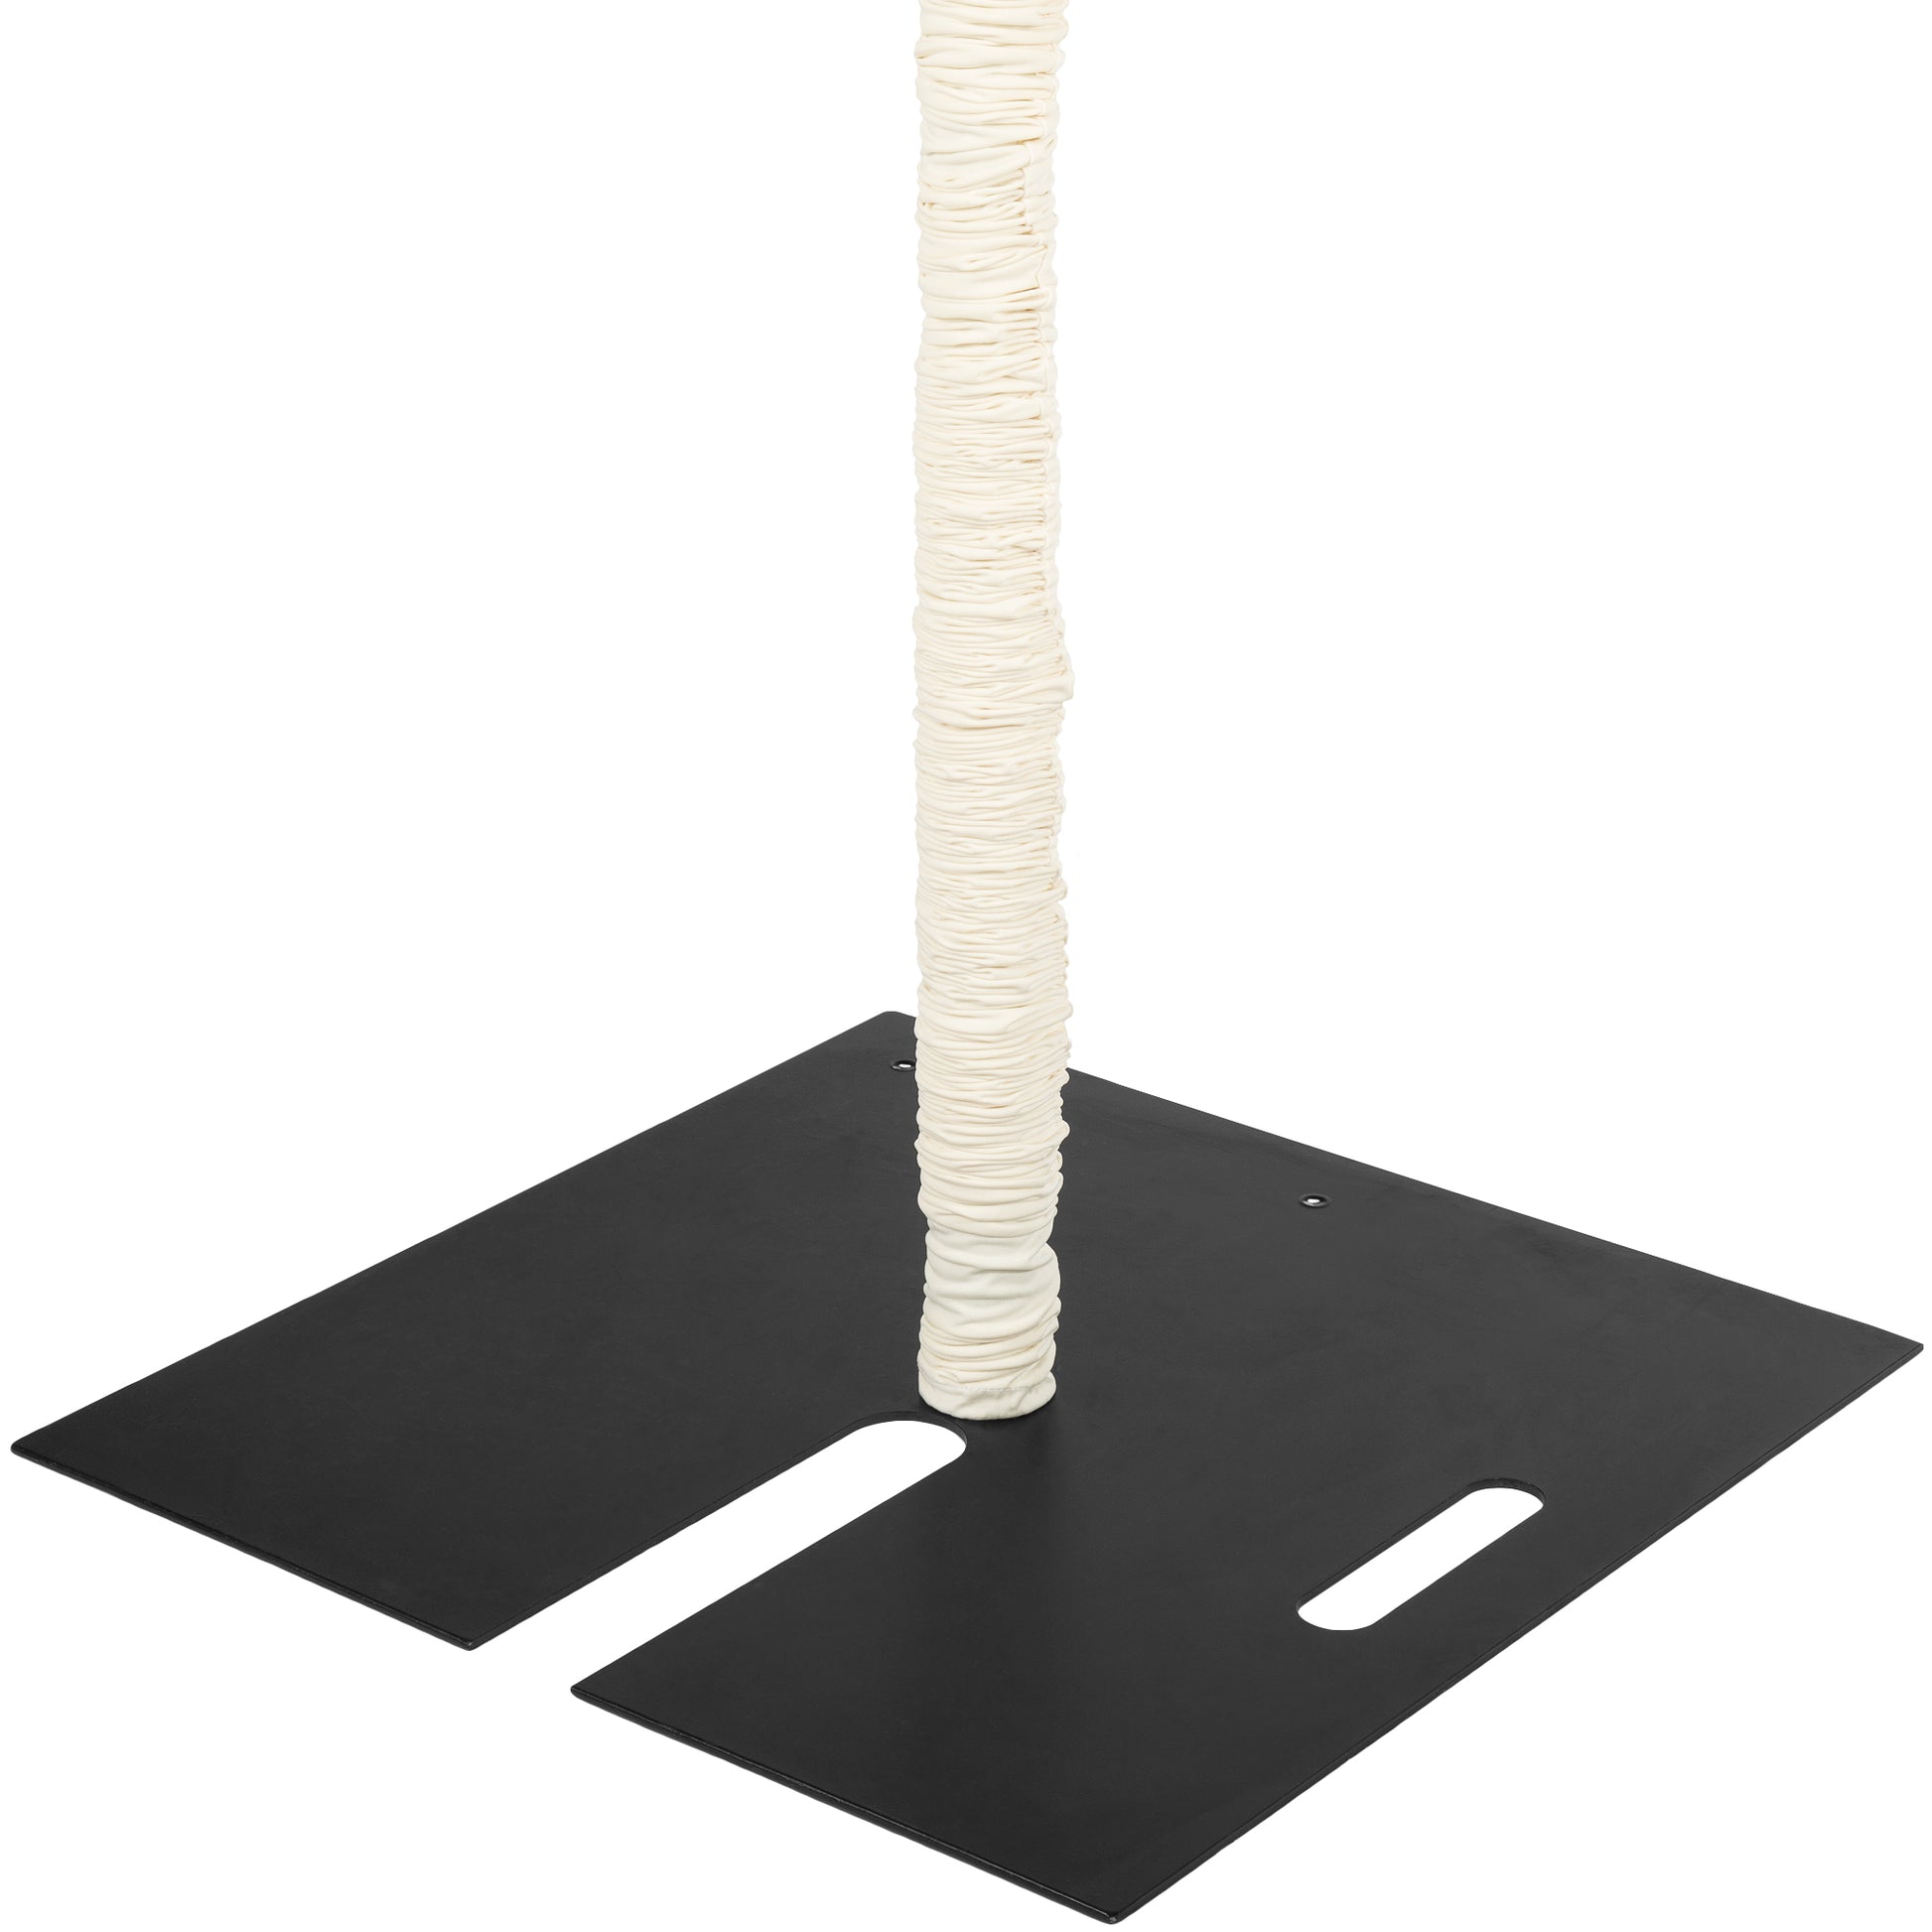 20ft Spandex Upright Pole Cover - Ivory - CV Linens